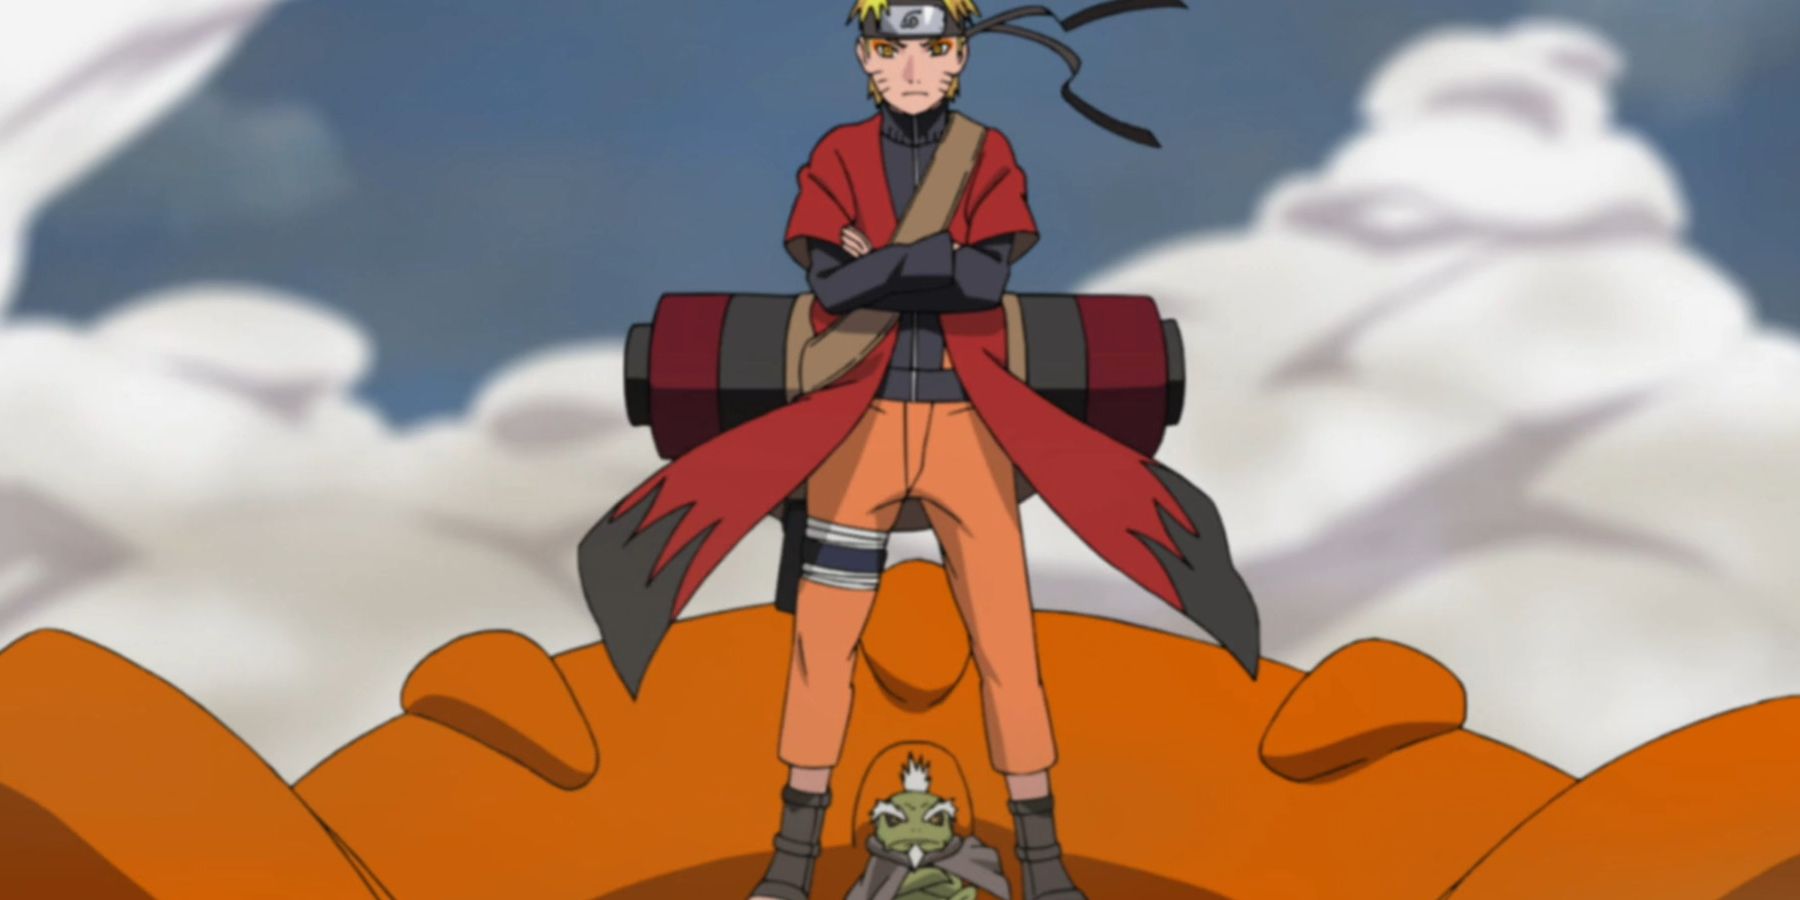 Naruto Uzumaki's entrance in Pain arc